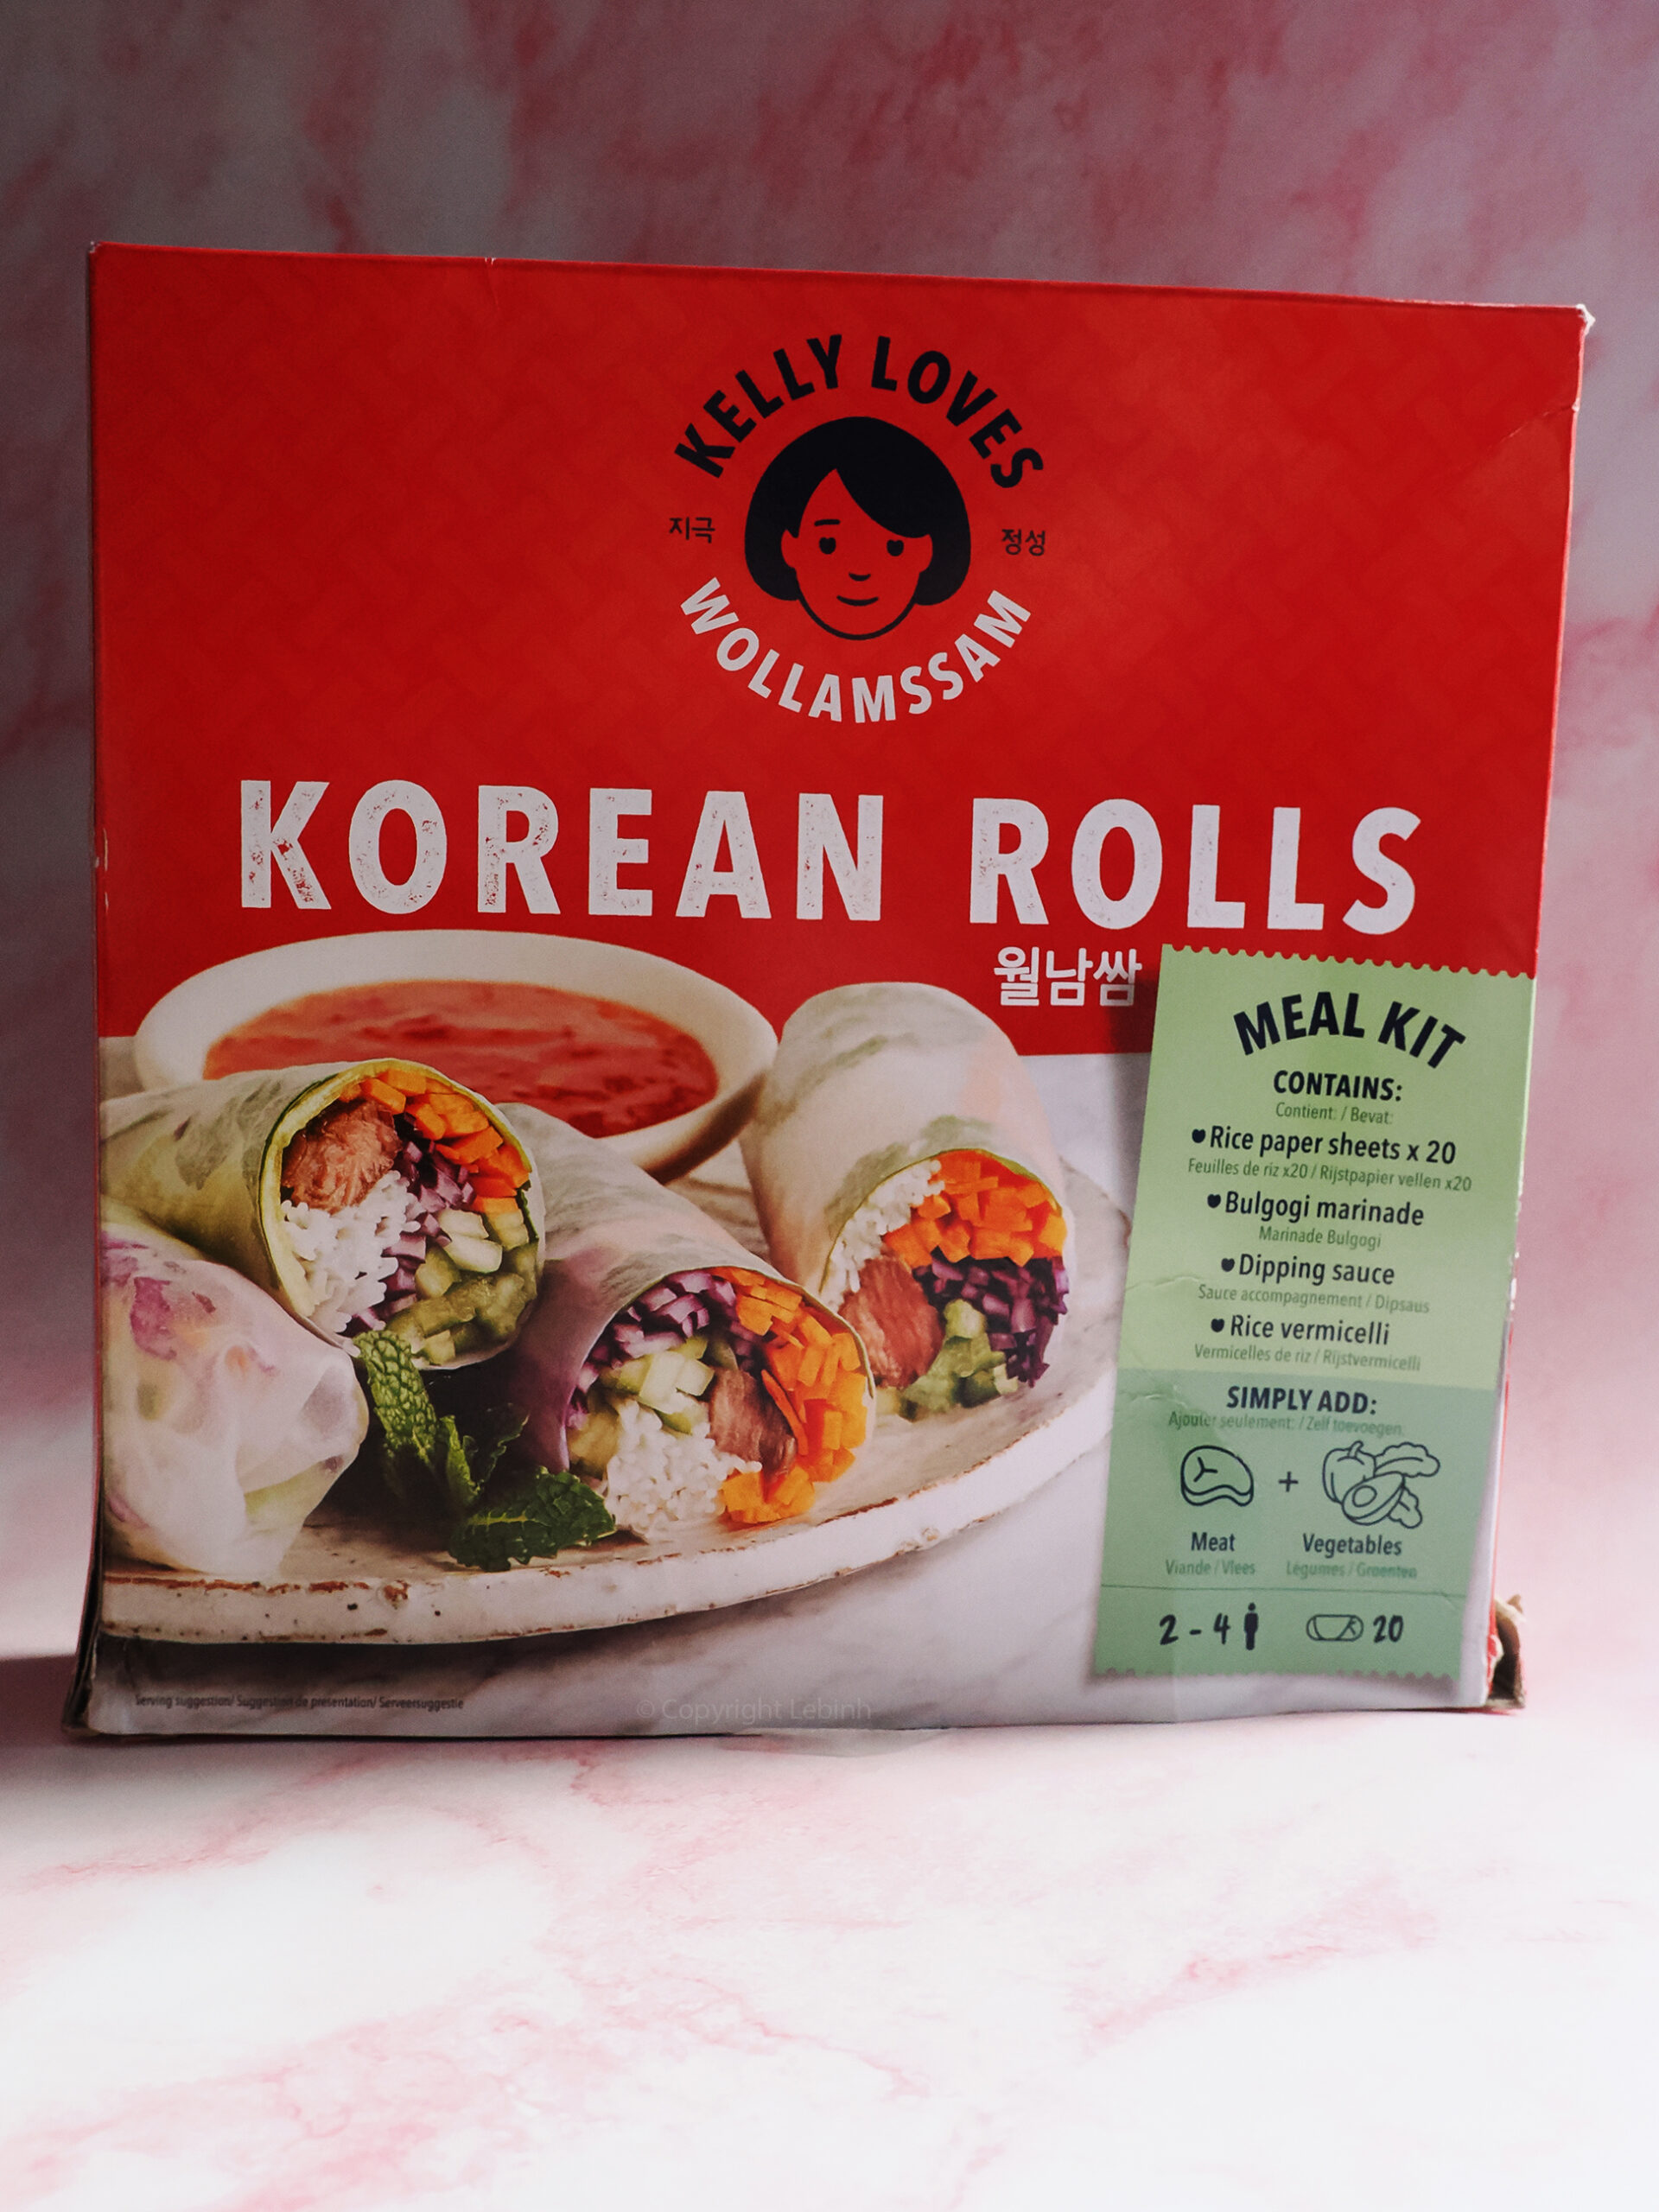 Kelly Loves Korean rolls kit box